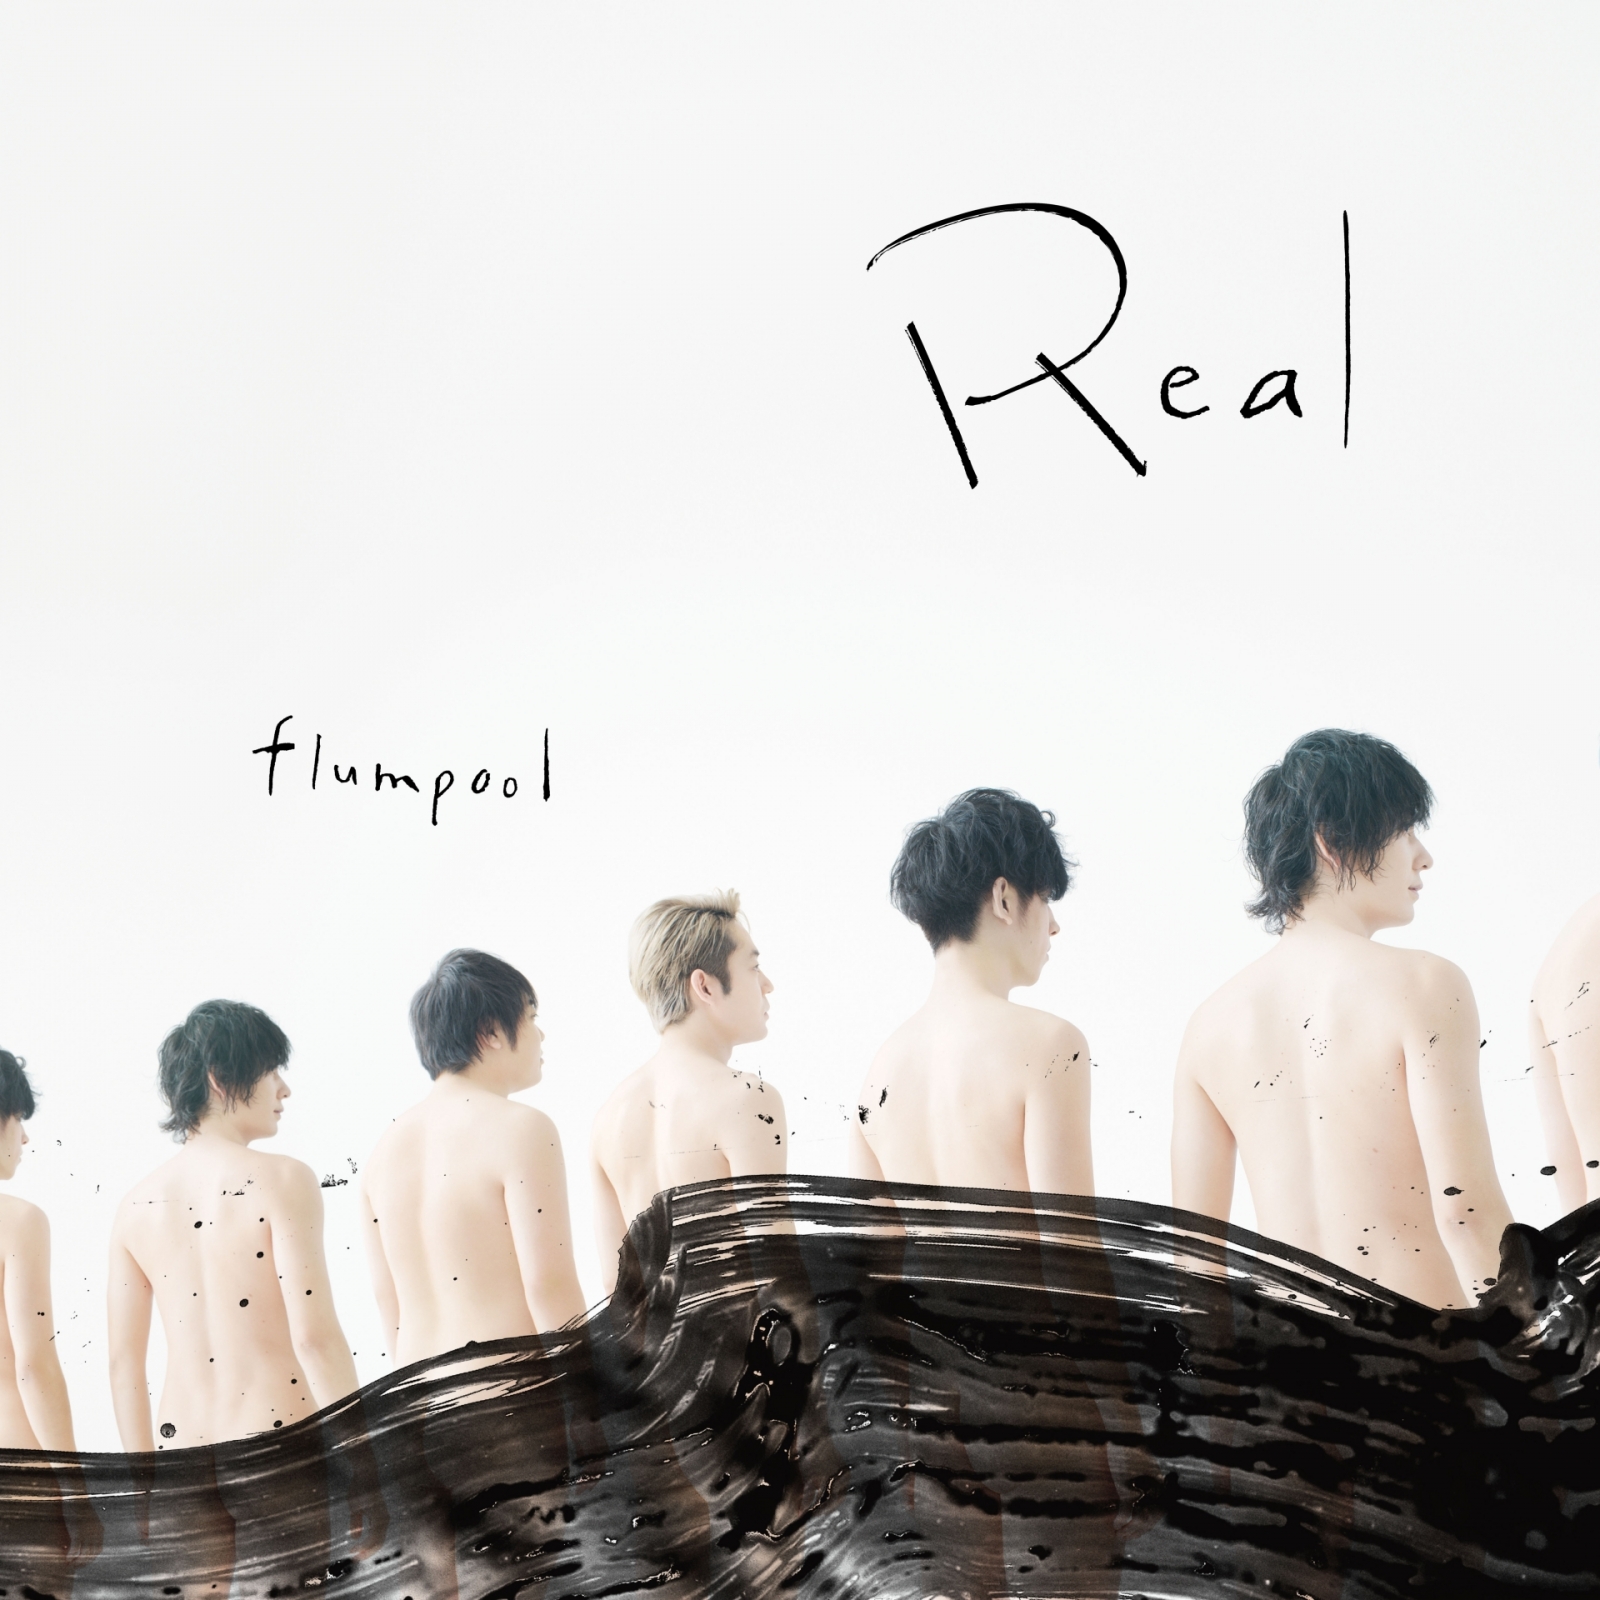 2flumpool凡人譜5月20日推出全新專輯《Real》.jpg